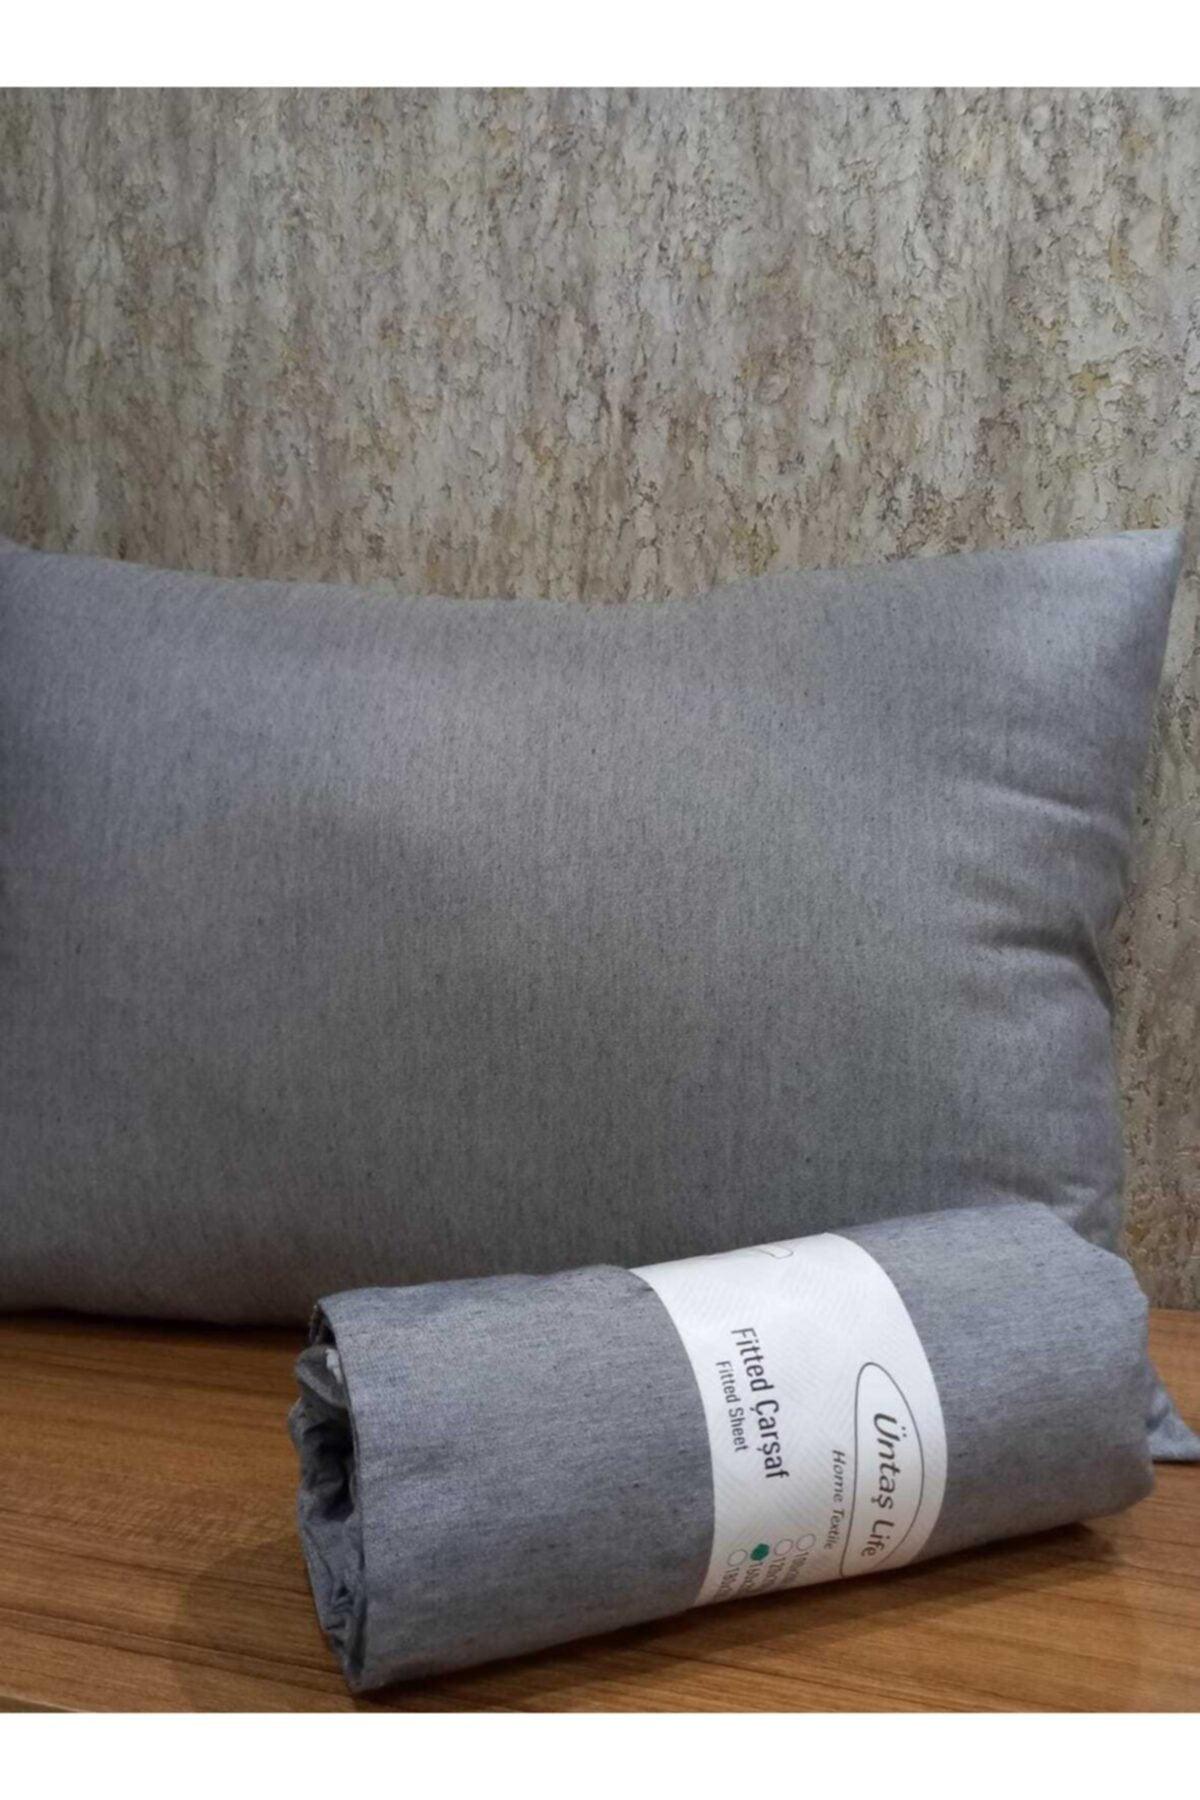 Life Single Elastic Bed Sheet +1 Pillowcase Plain Gray Ec100plain Gray Sheet - Swordslife